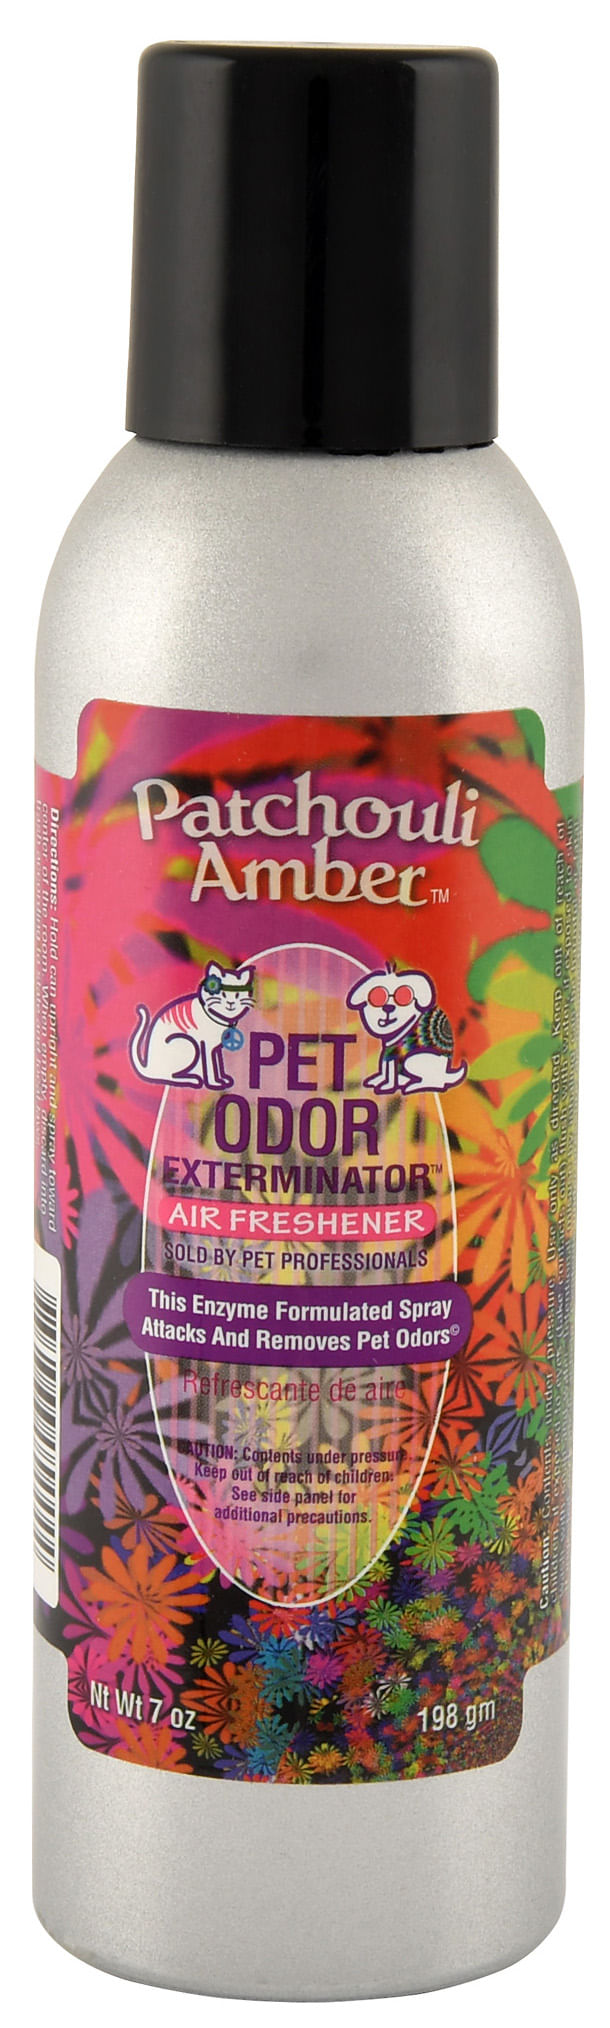 Pet-Odor-Exterminator-Air-Freshener-Spray-Patchouli-Amber